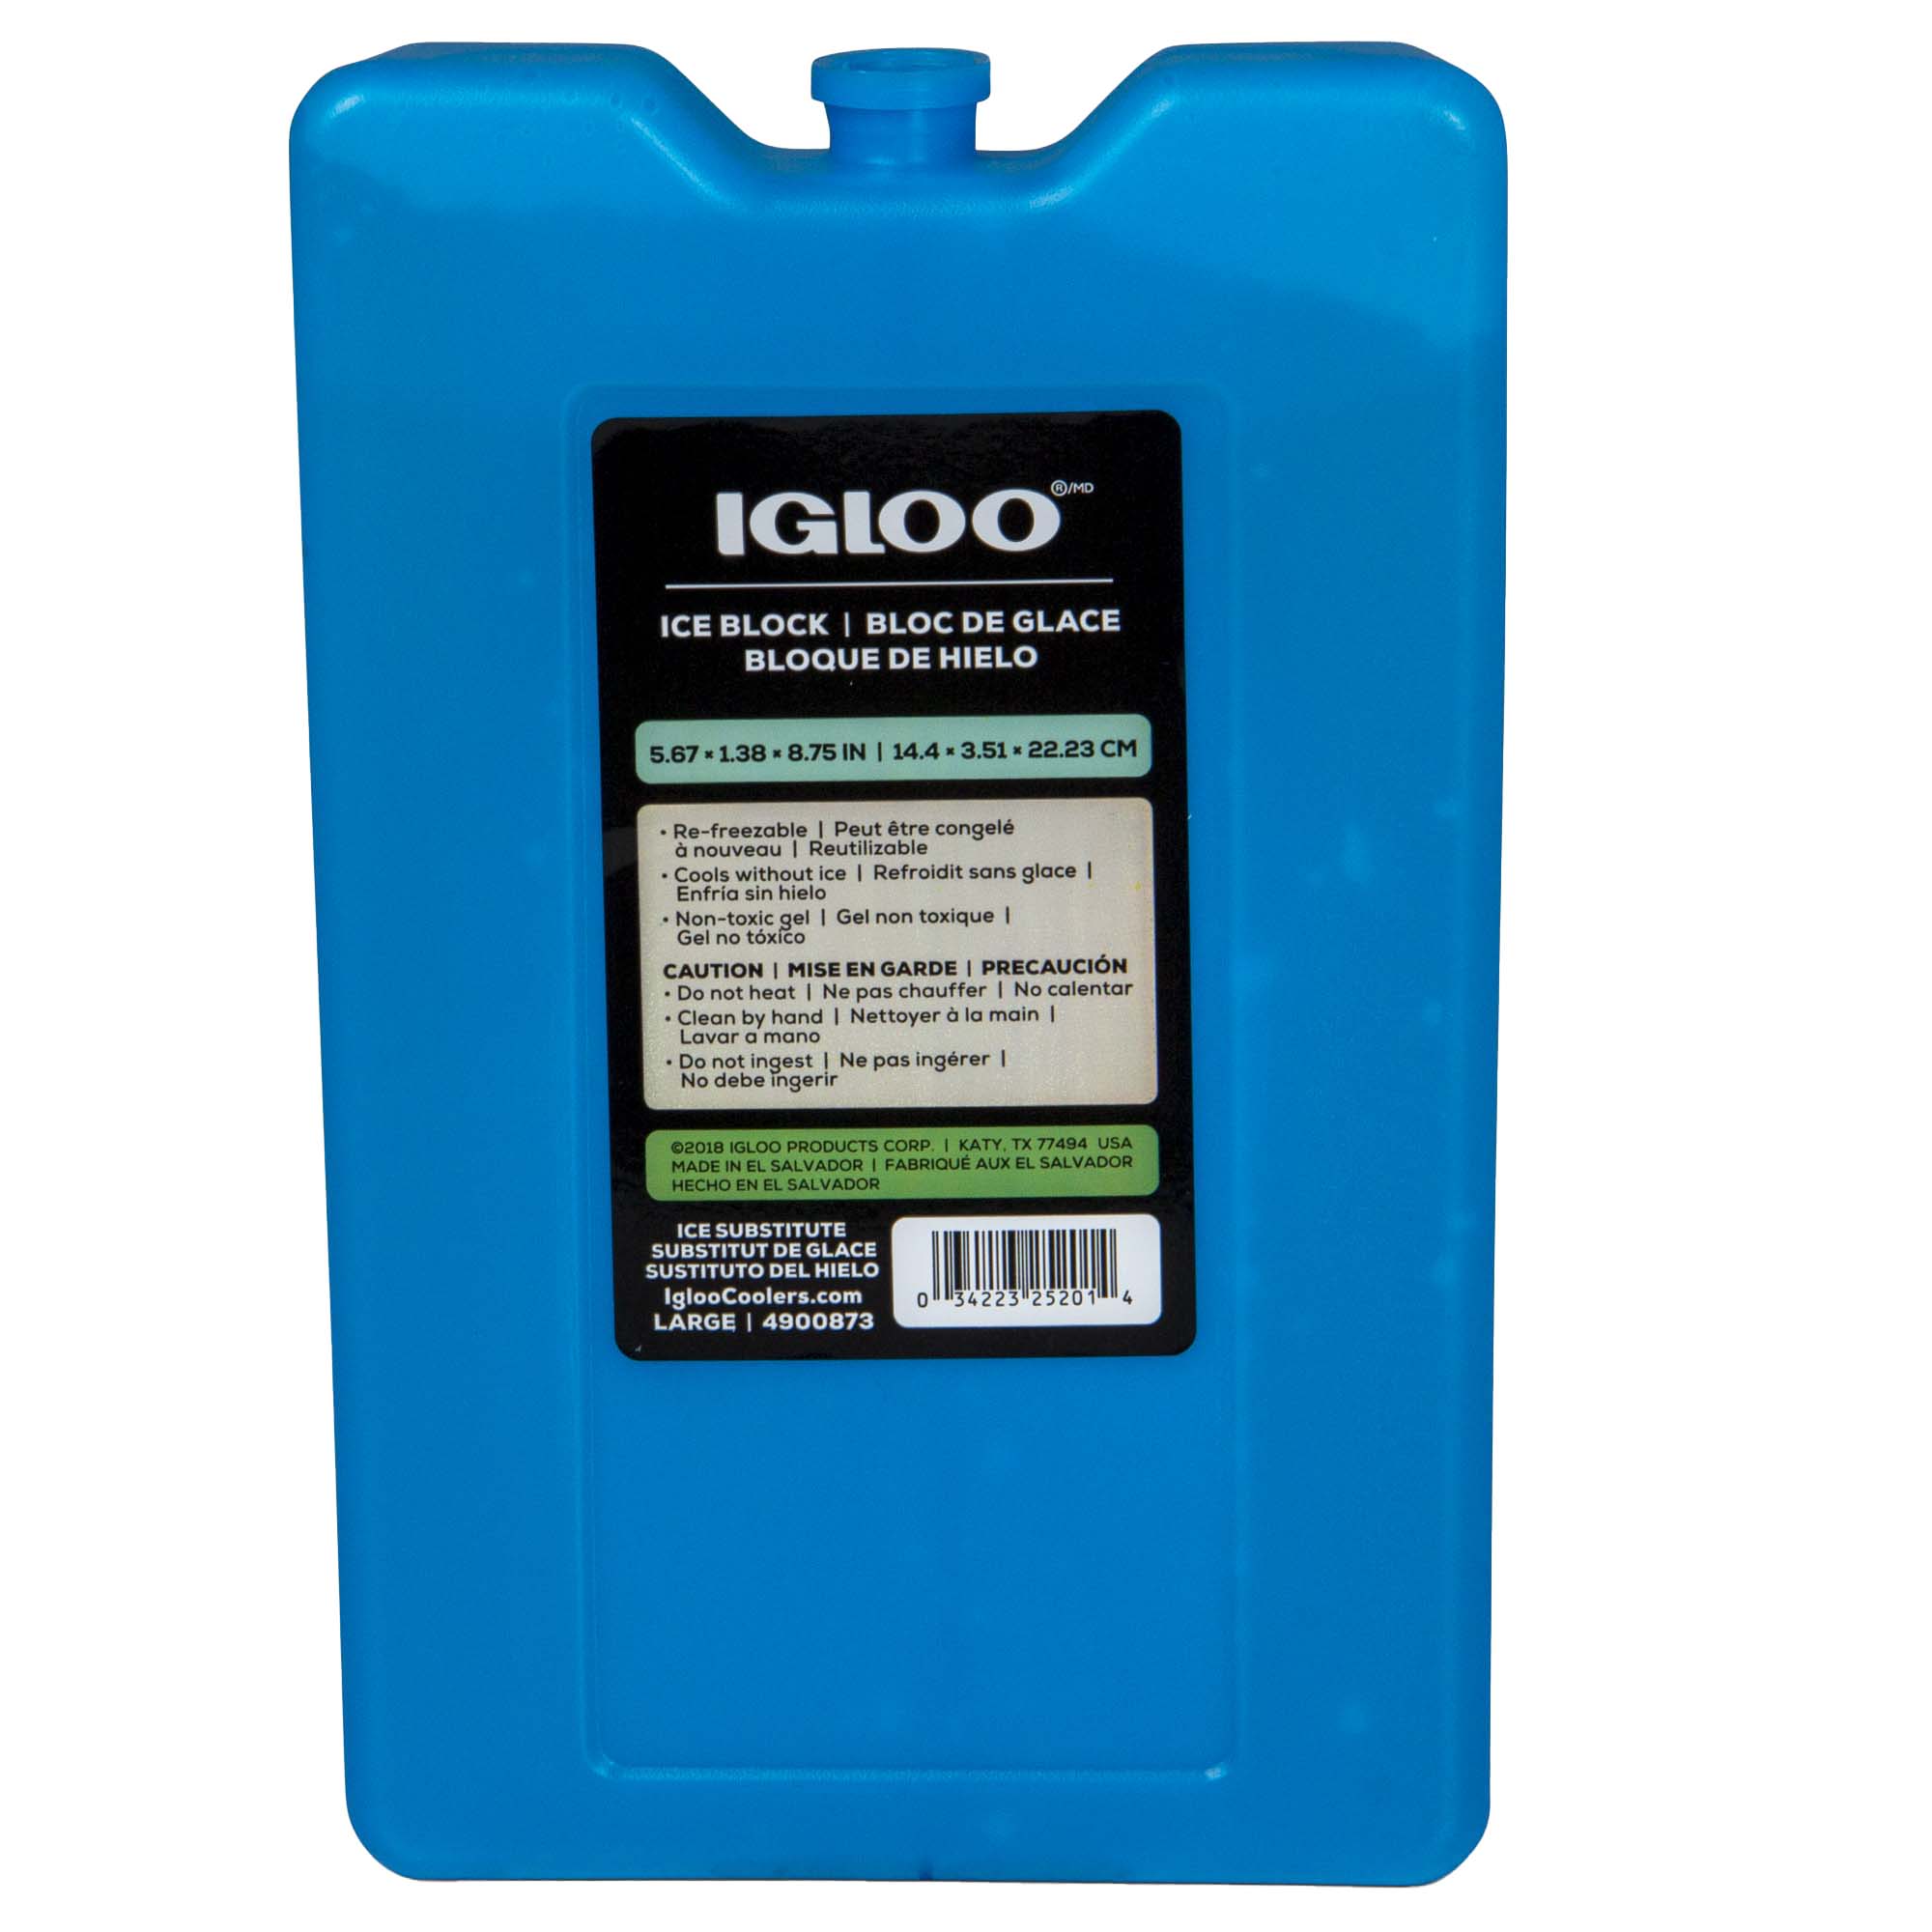 Photos - Cooler Bag Igloo Ice Block Large Coolbox & Freezer Pack, Blue IG25201 